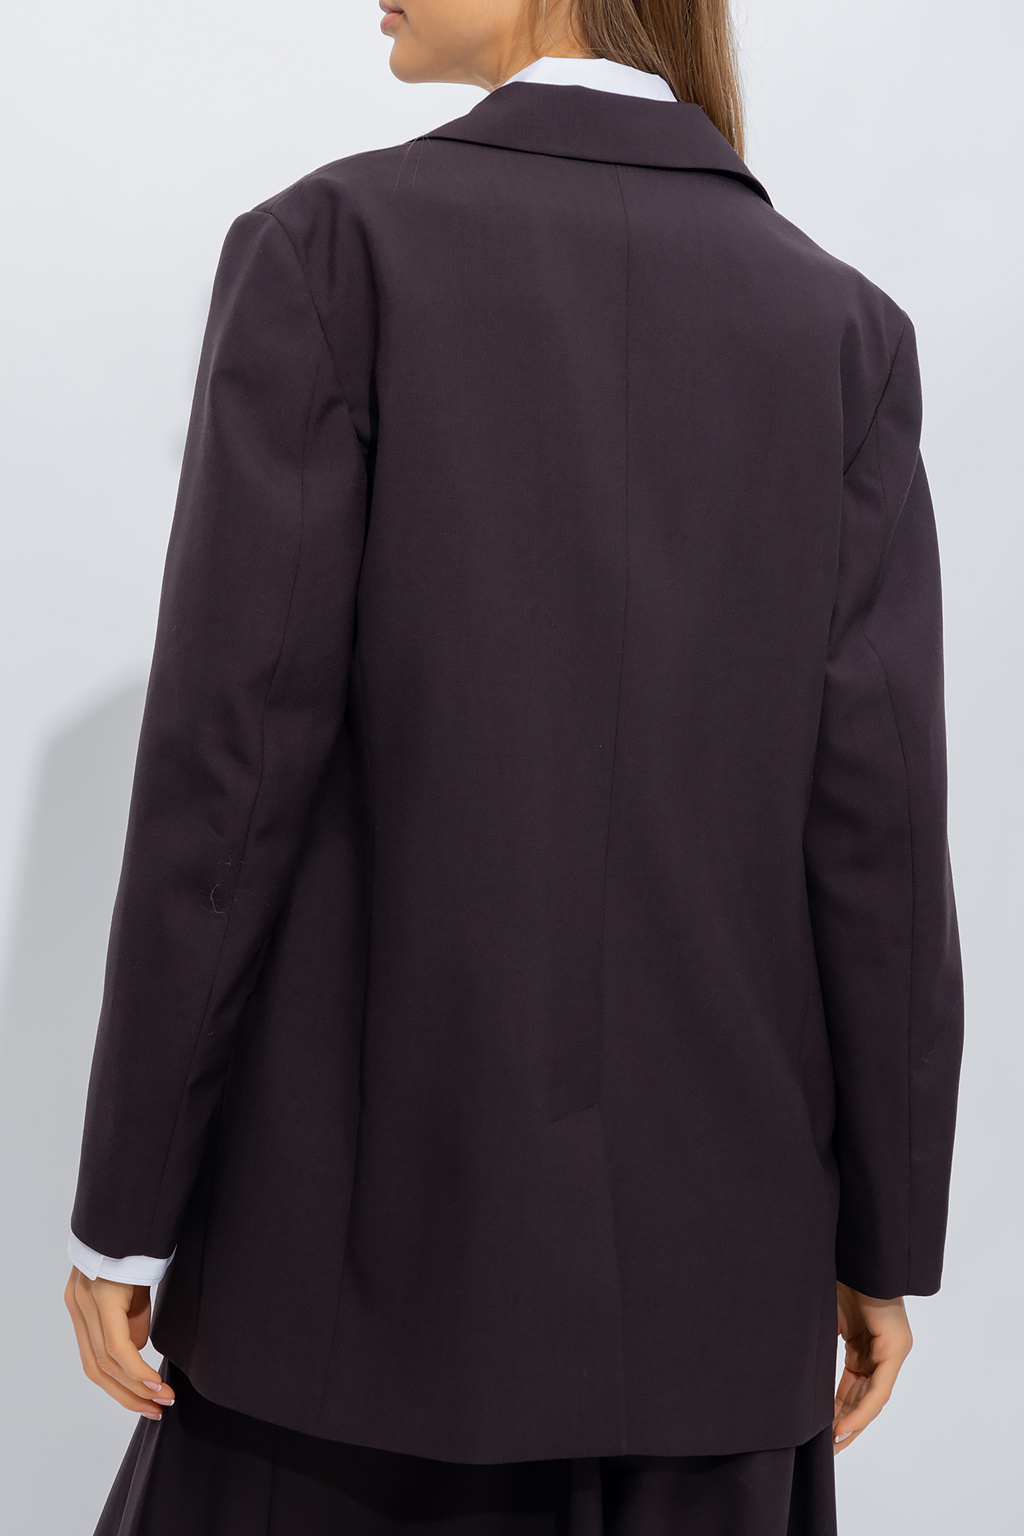 marni sling-back Wool blazer